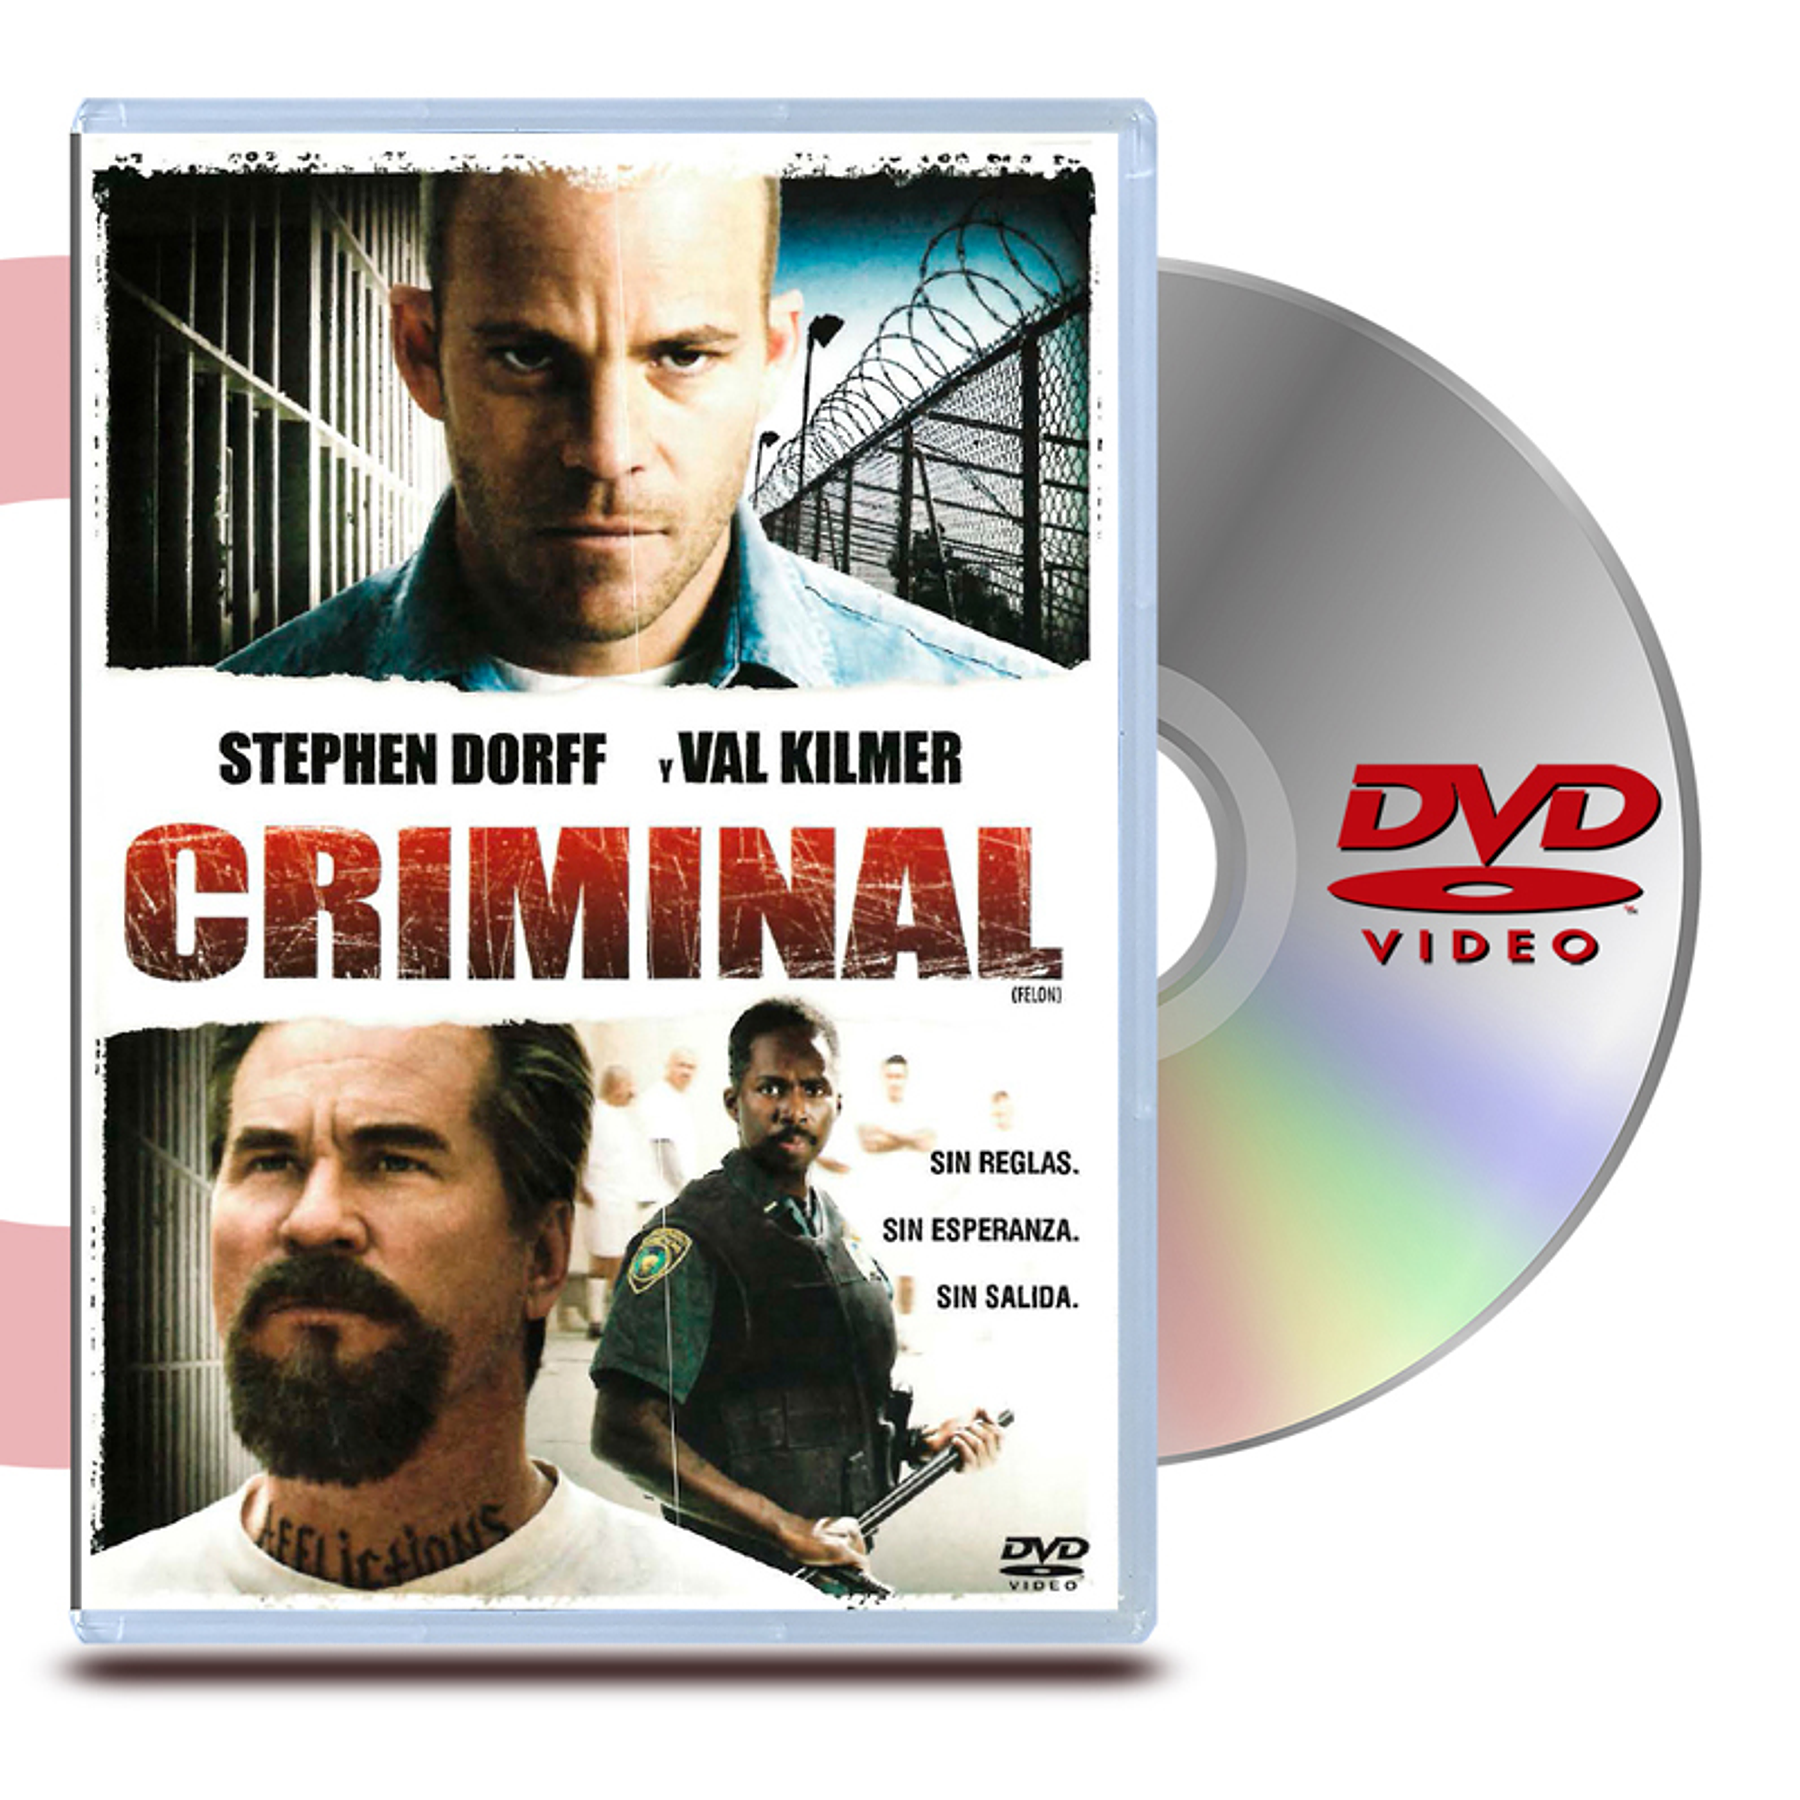 DVD CRIMINAL